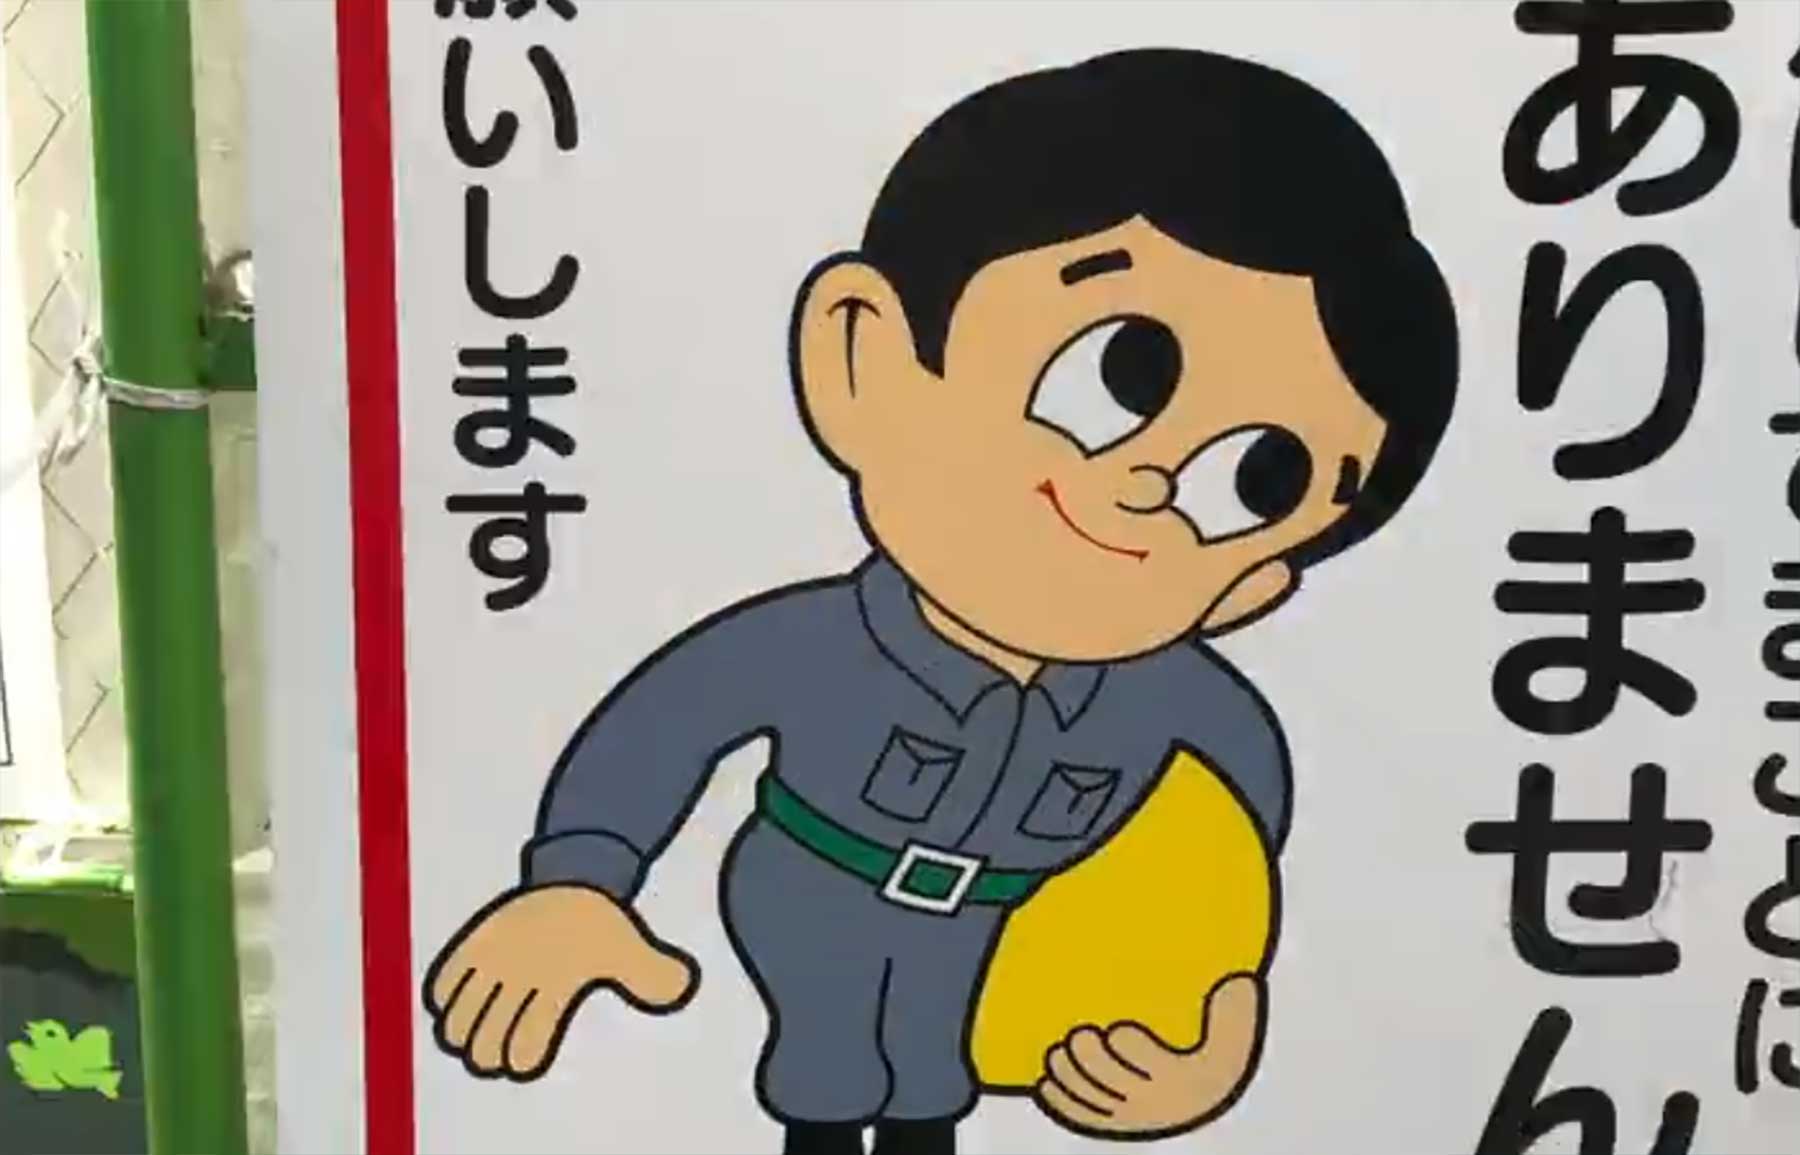 Stopmotion aus japanischen Hinweisschild-Figuren